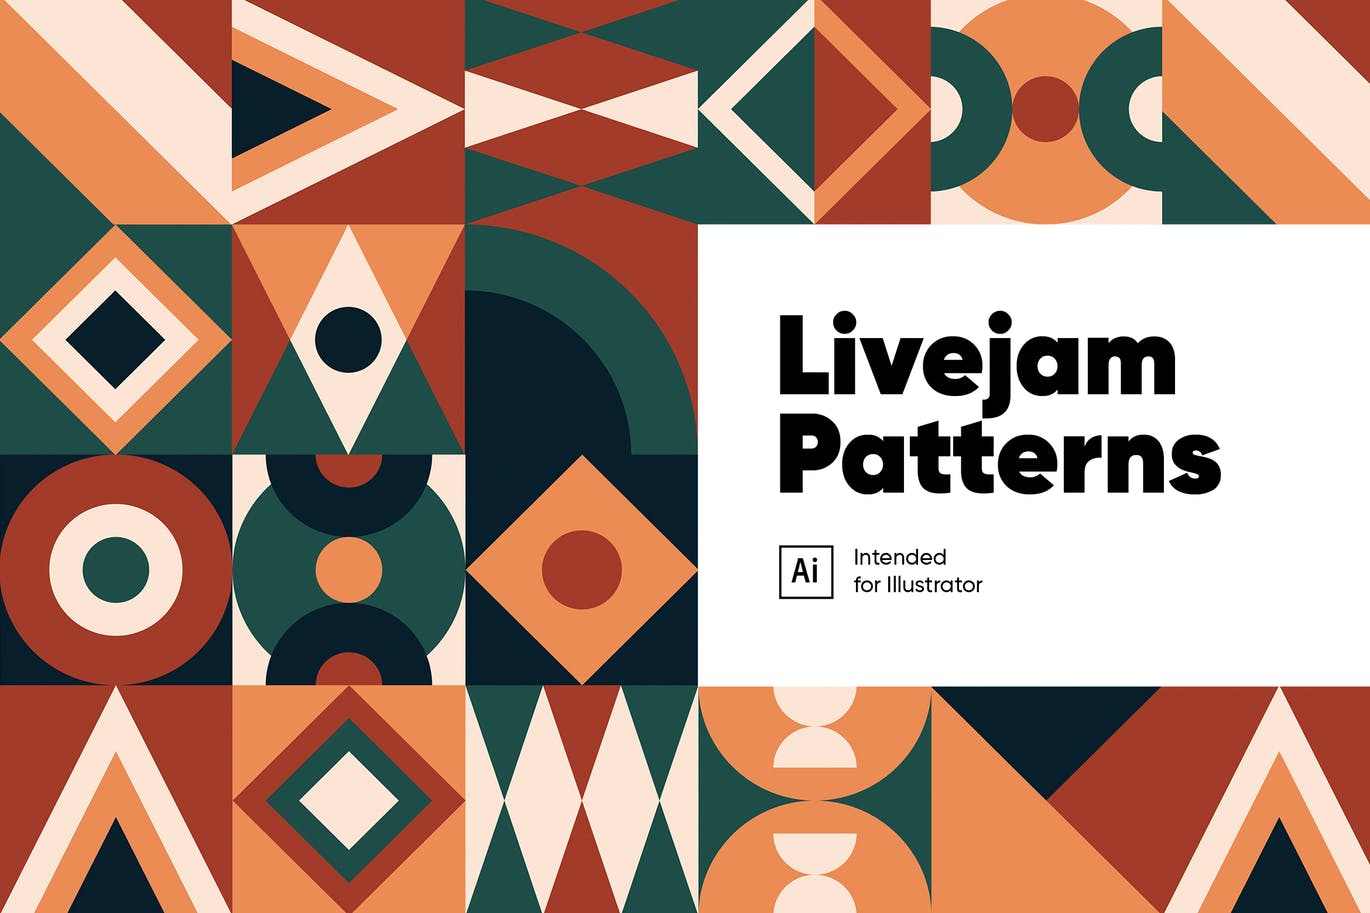 Livejam抽象图案背景蚂蚁素材精选 Livejam Abstract Patterns Pack插图